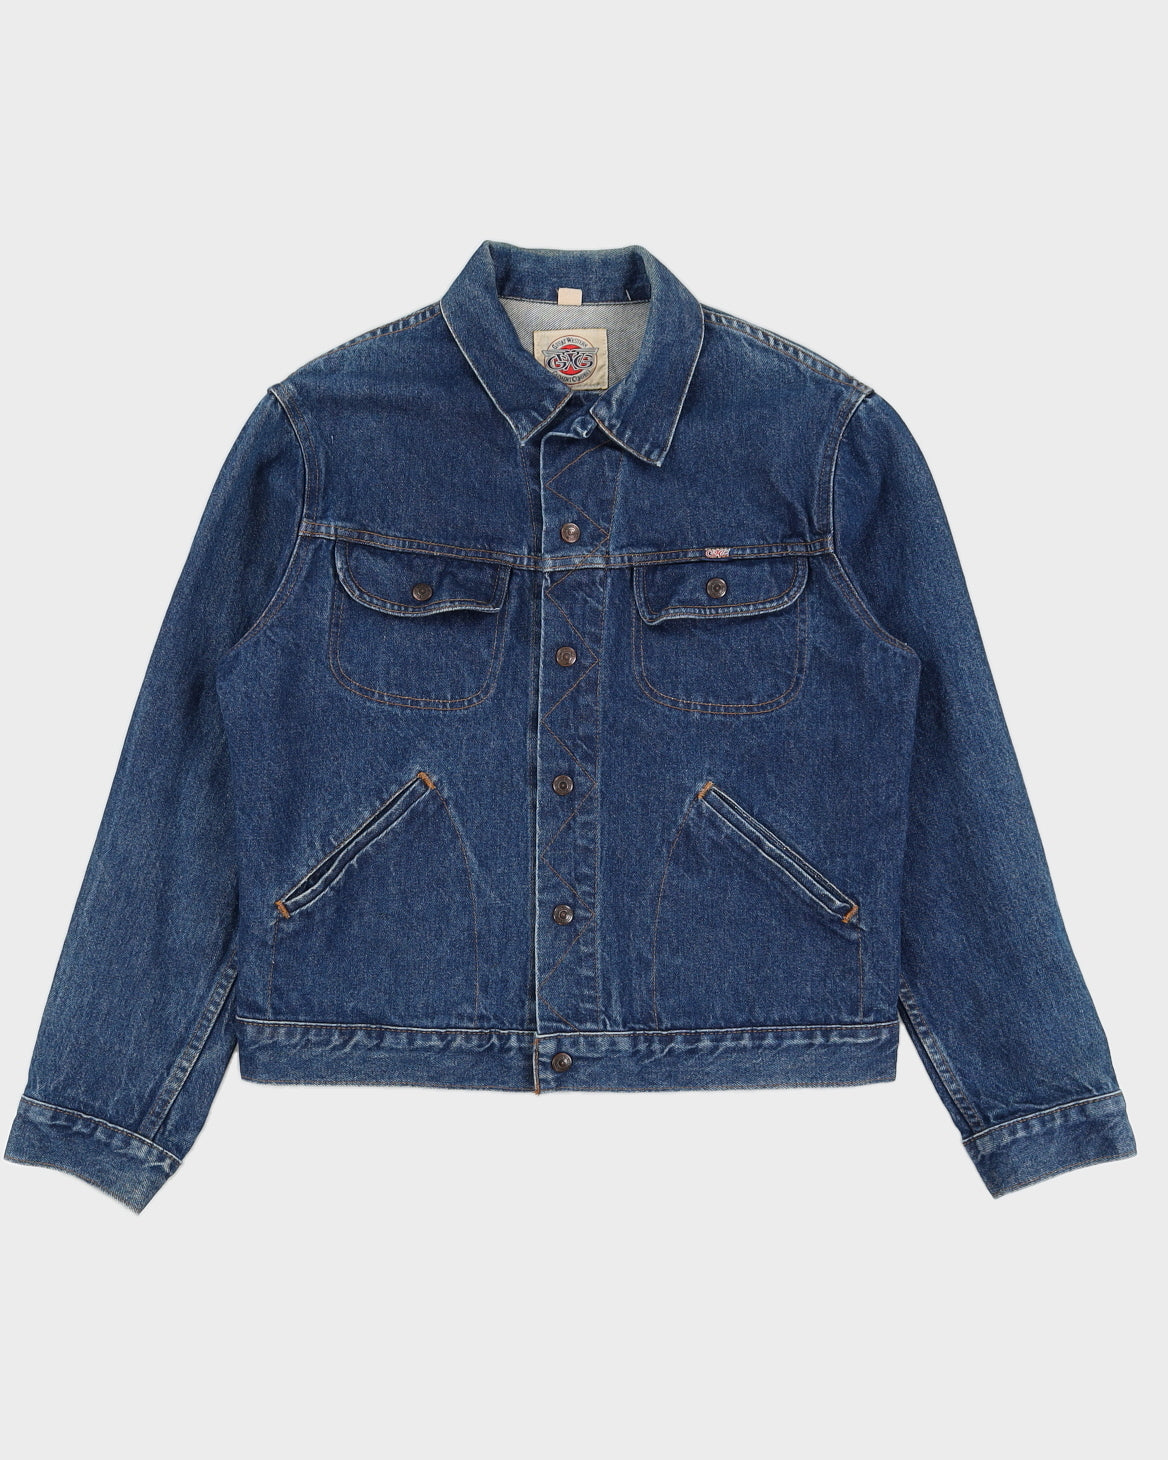 Vintage 90s GWG Medium Wash Blue Denim Jacket - M